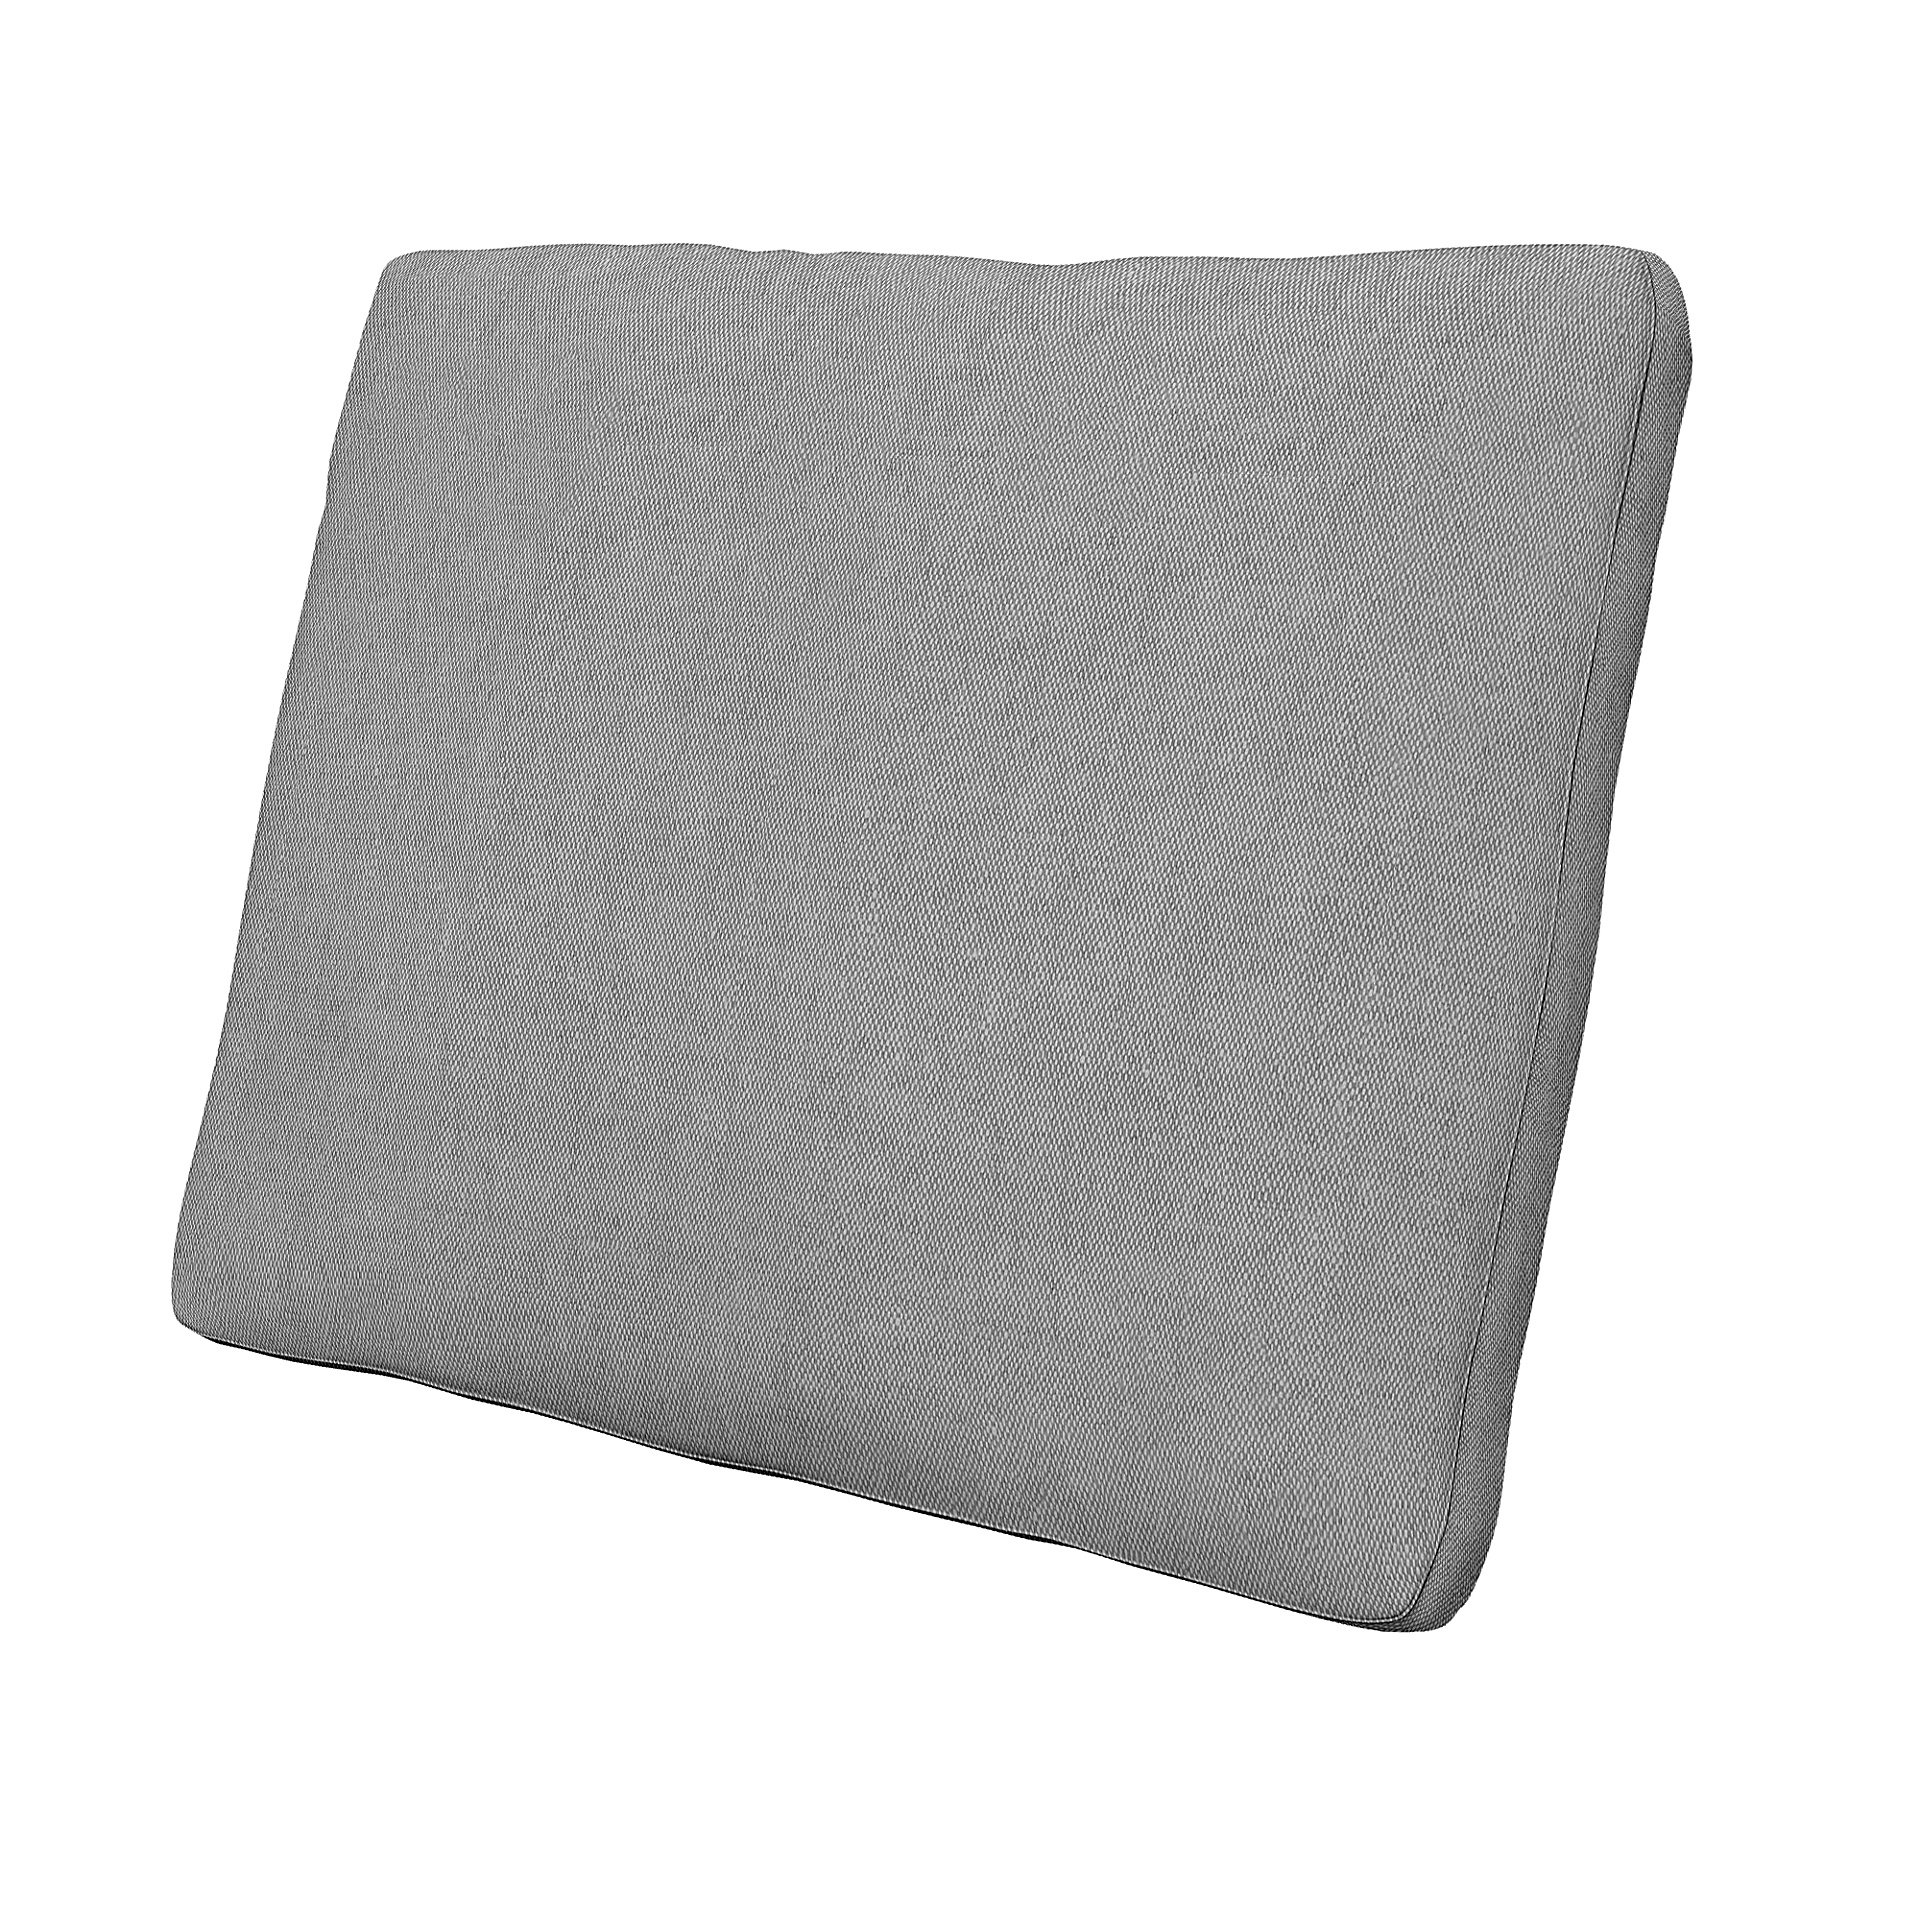 IKEA - Cushion Cover Karlstad 58x48x5 cm, Graphite, Linen - Bemz